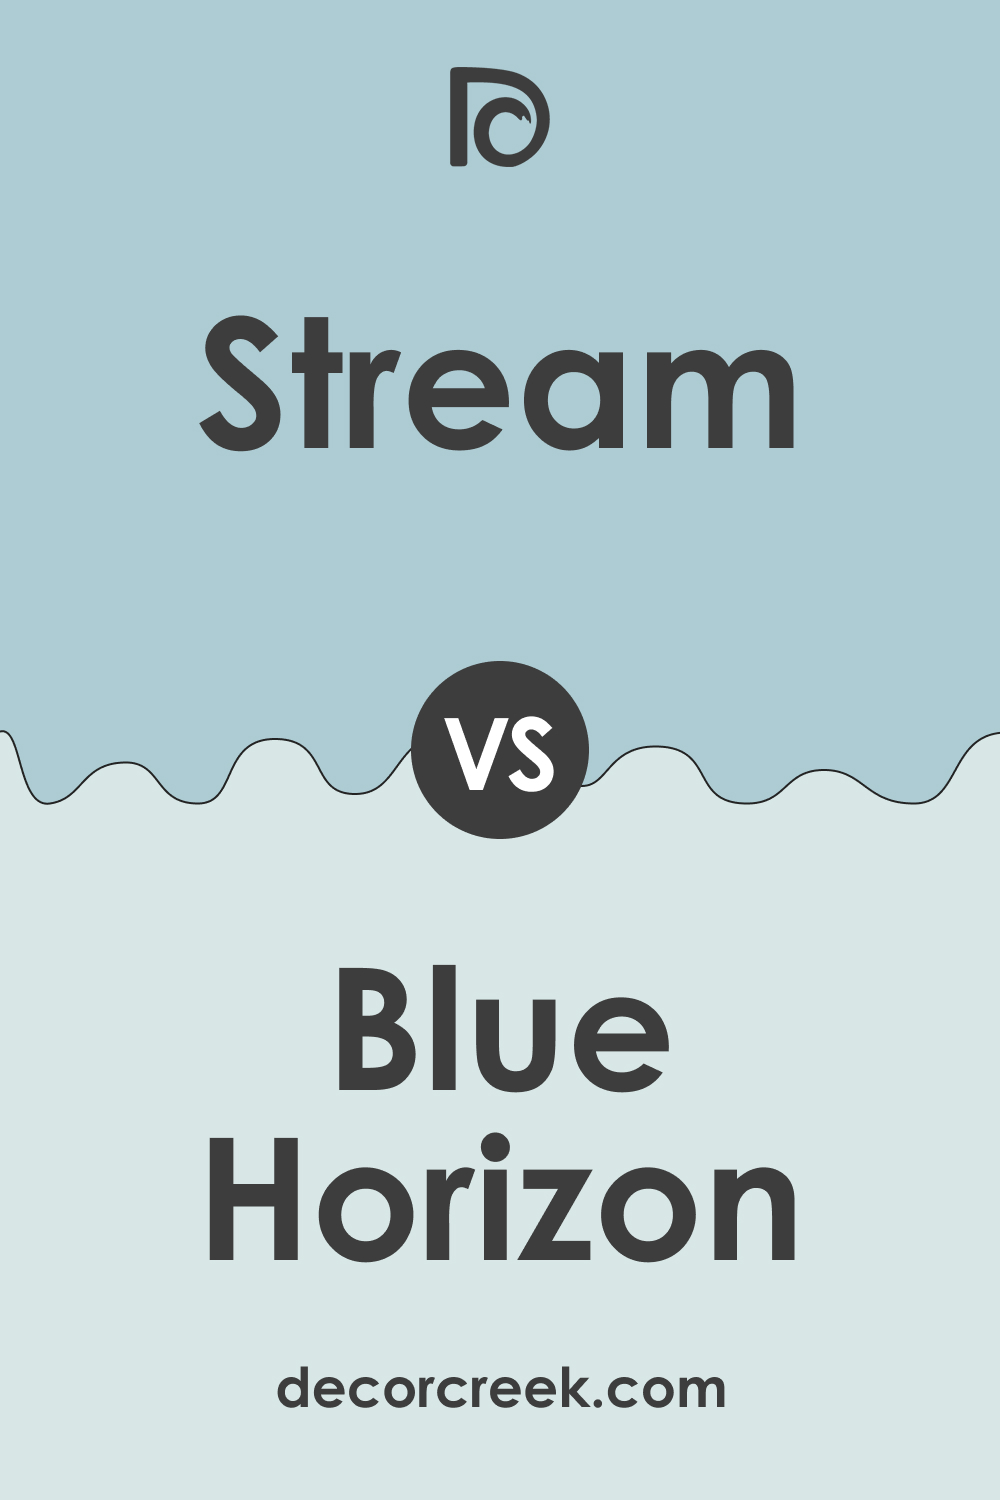 SW 6499 Stream vs SW 6497 Blue Horizon